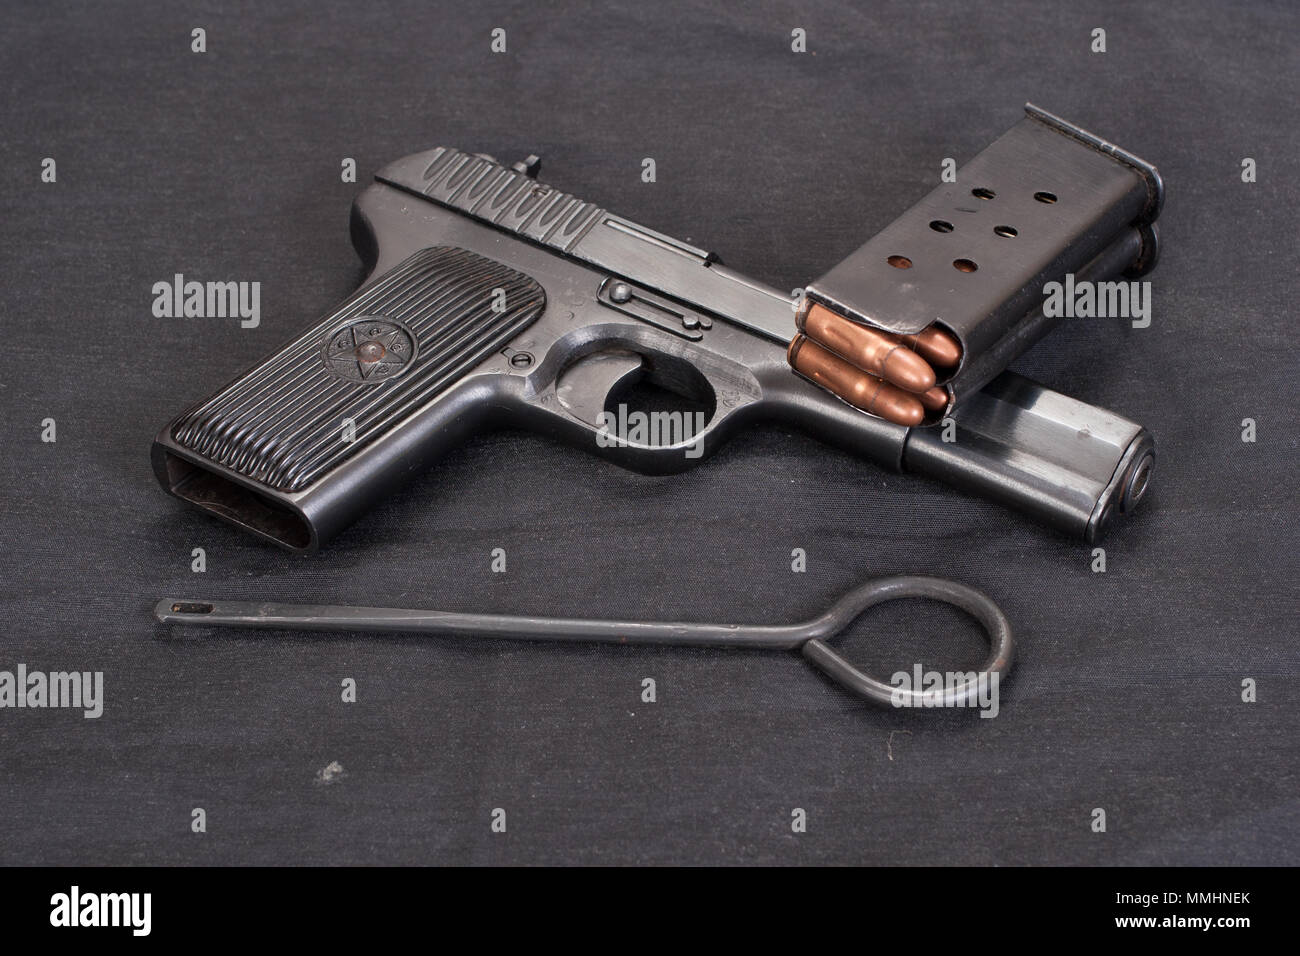 handgun on black background Stock Photo